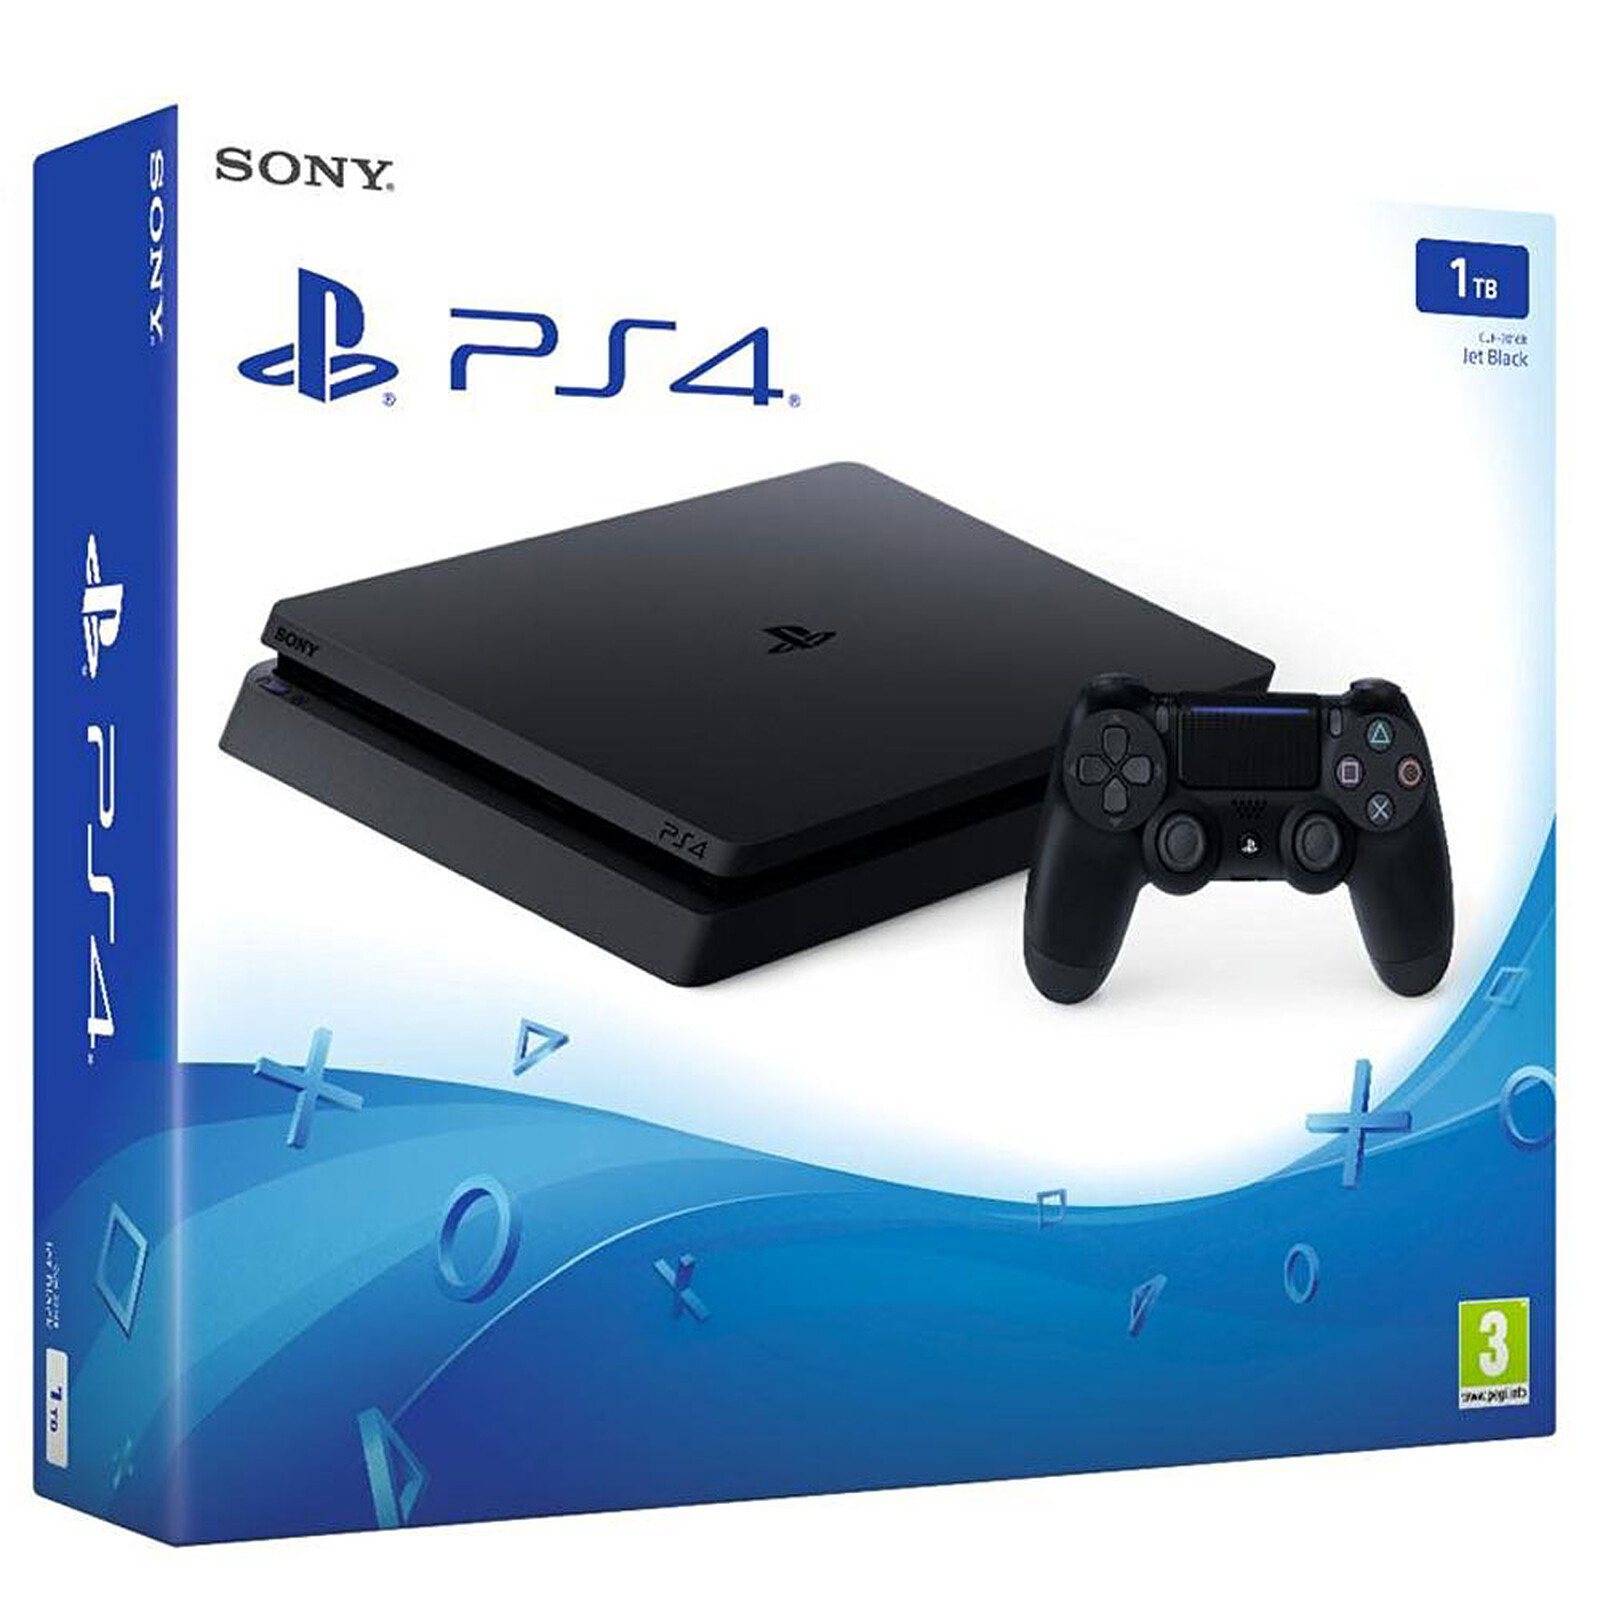 Sony PlayStation 4 Slim (1 TB) - Consola PS4 - LDLC